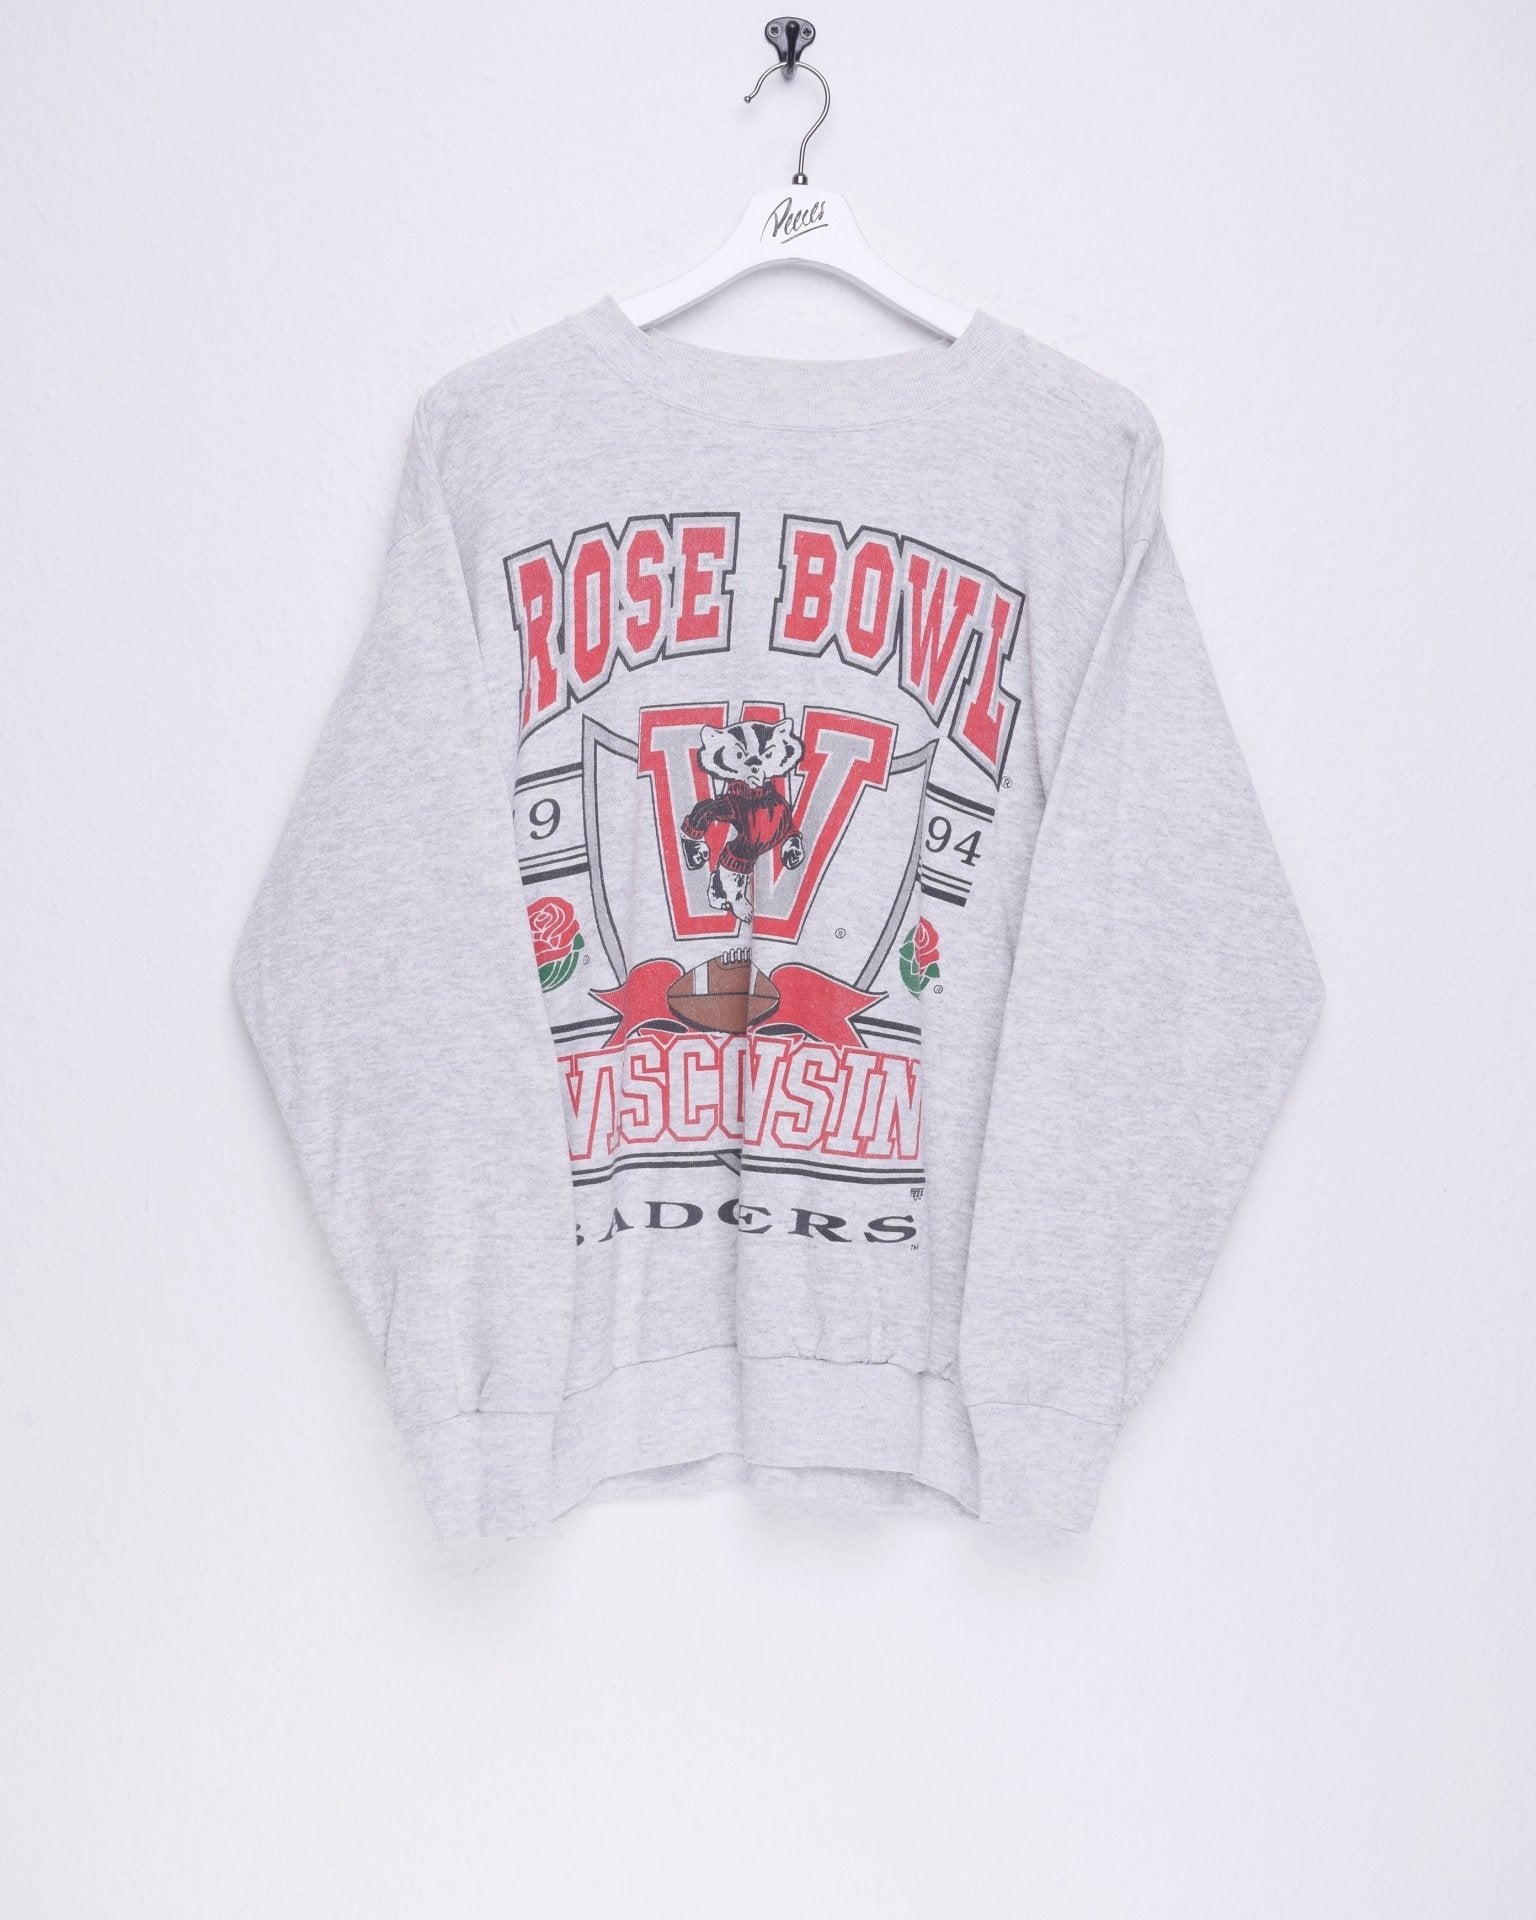 Rose Bowl 1994 Wisconsin Badgers printed Logo Sweater - Peeces